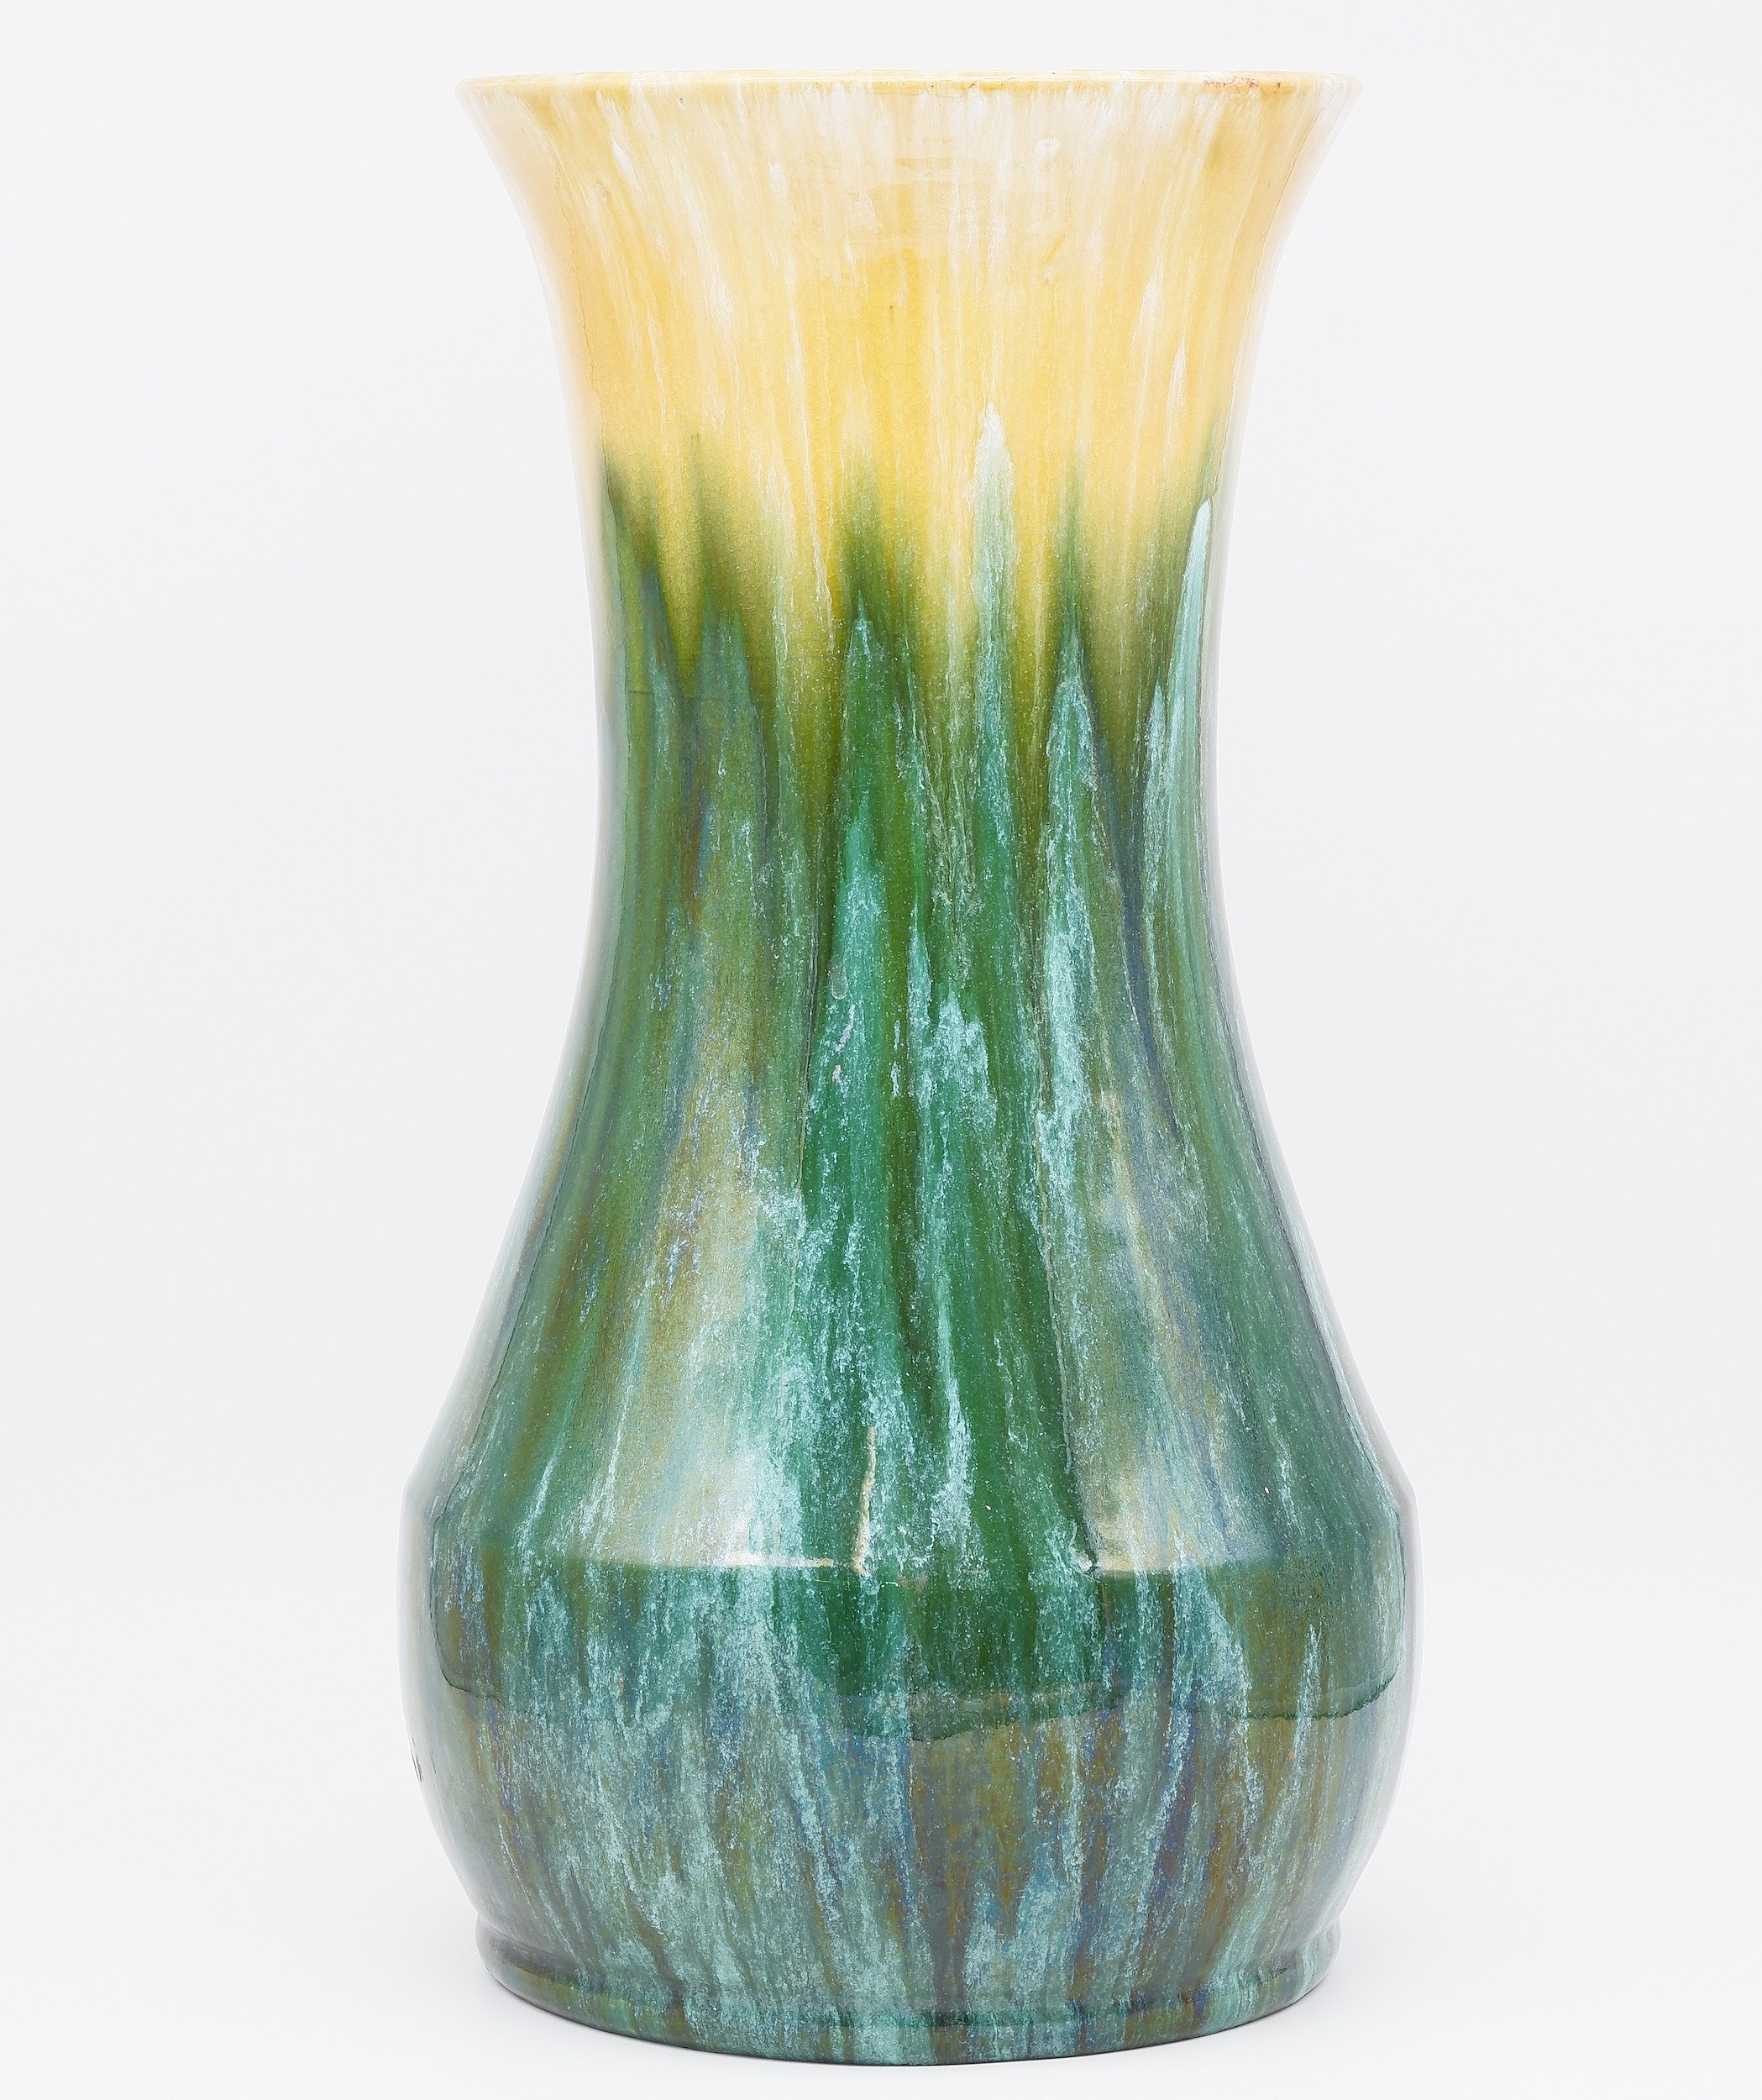 'Large John Campbell Tasmania Pottery Vase'